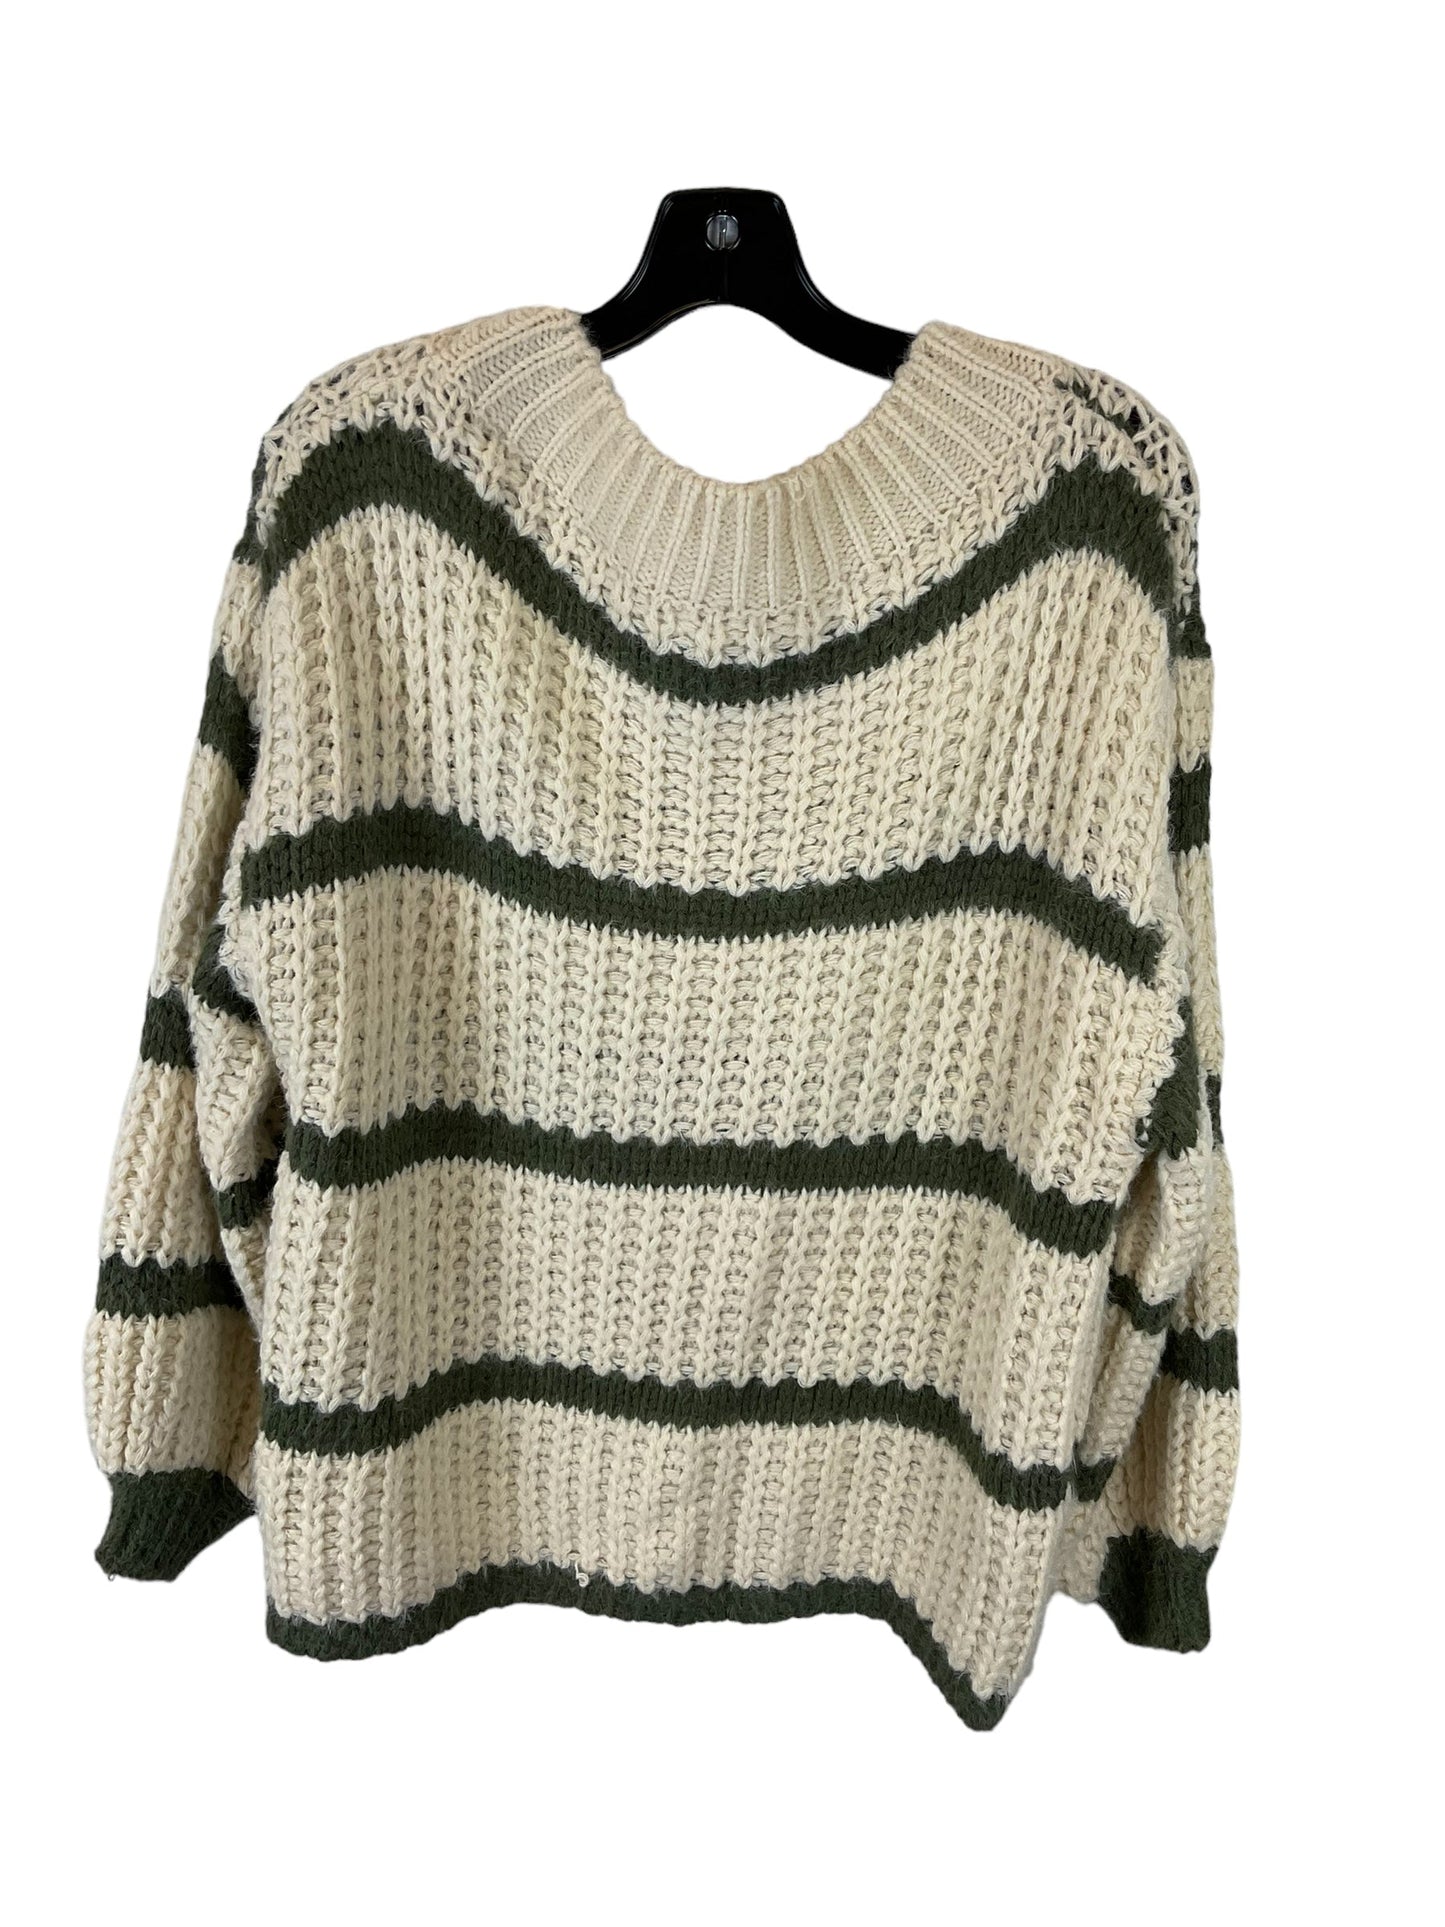 Sweater By Kori America  Size: S